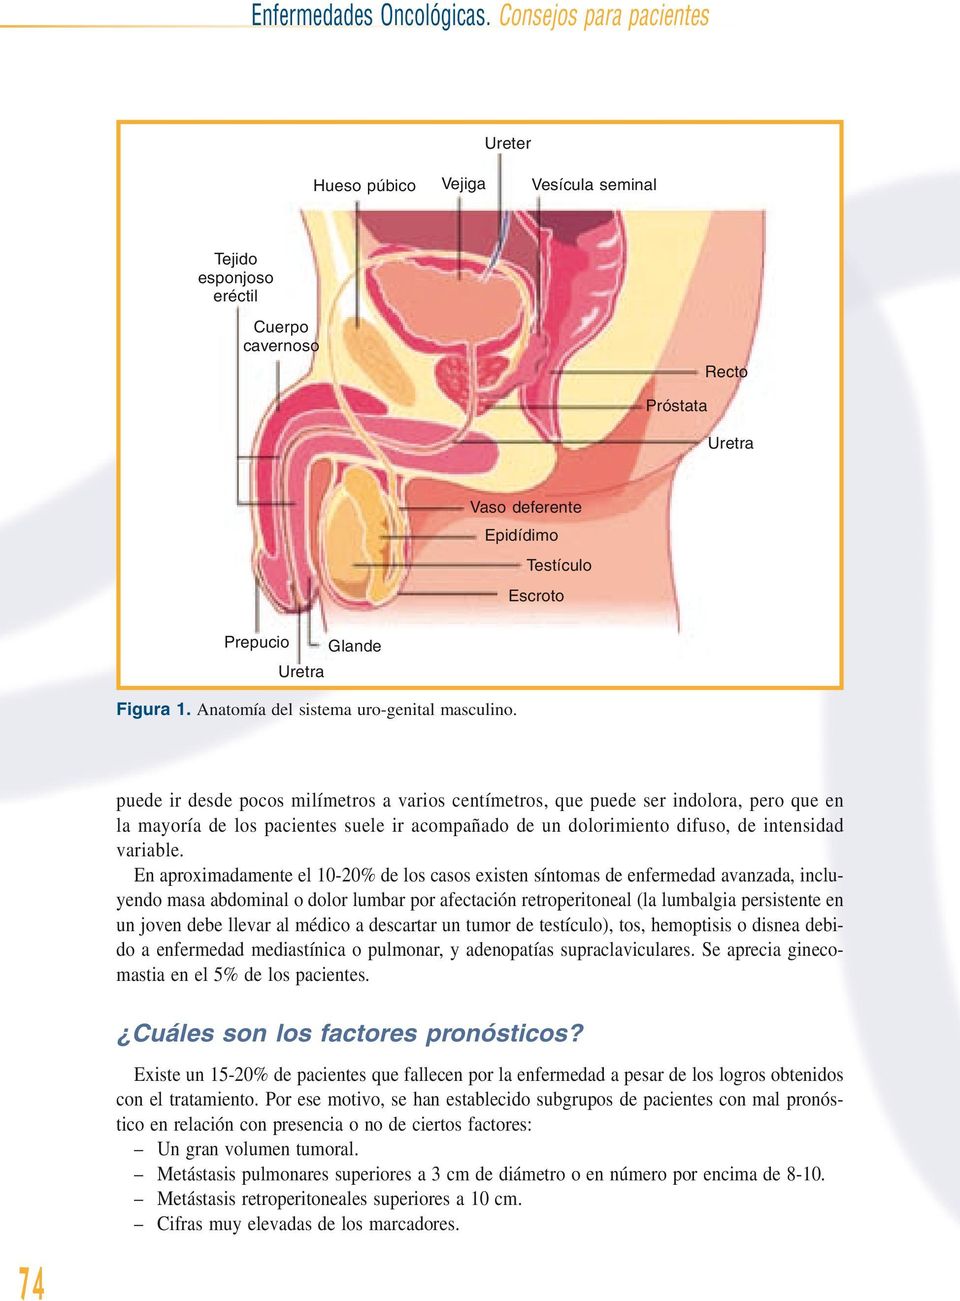 Figura 1. Anatomía del sistema uro-genital masculino.